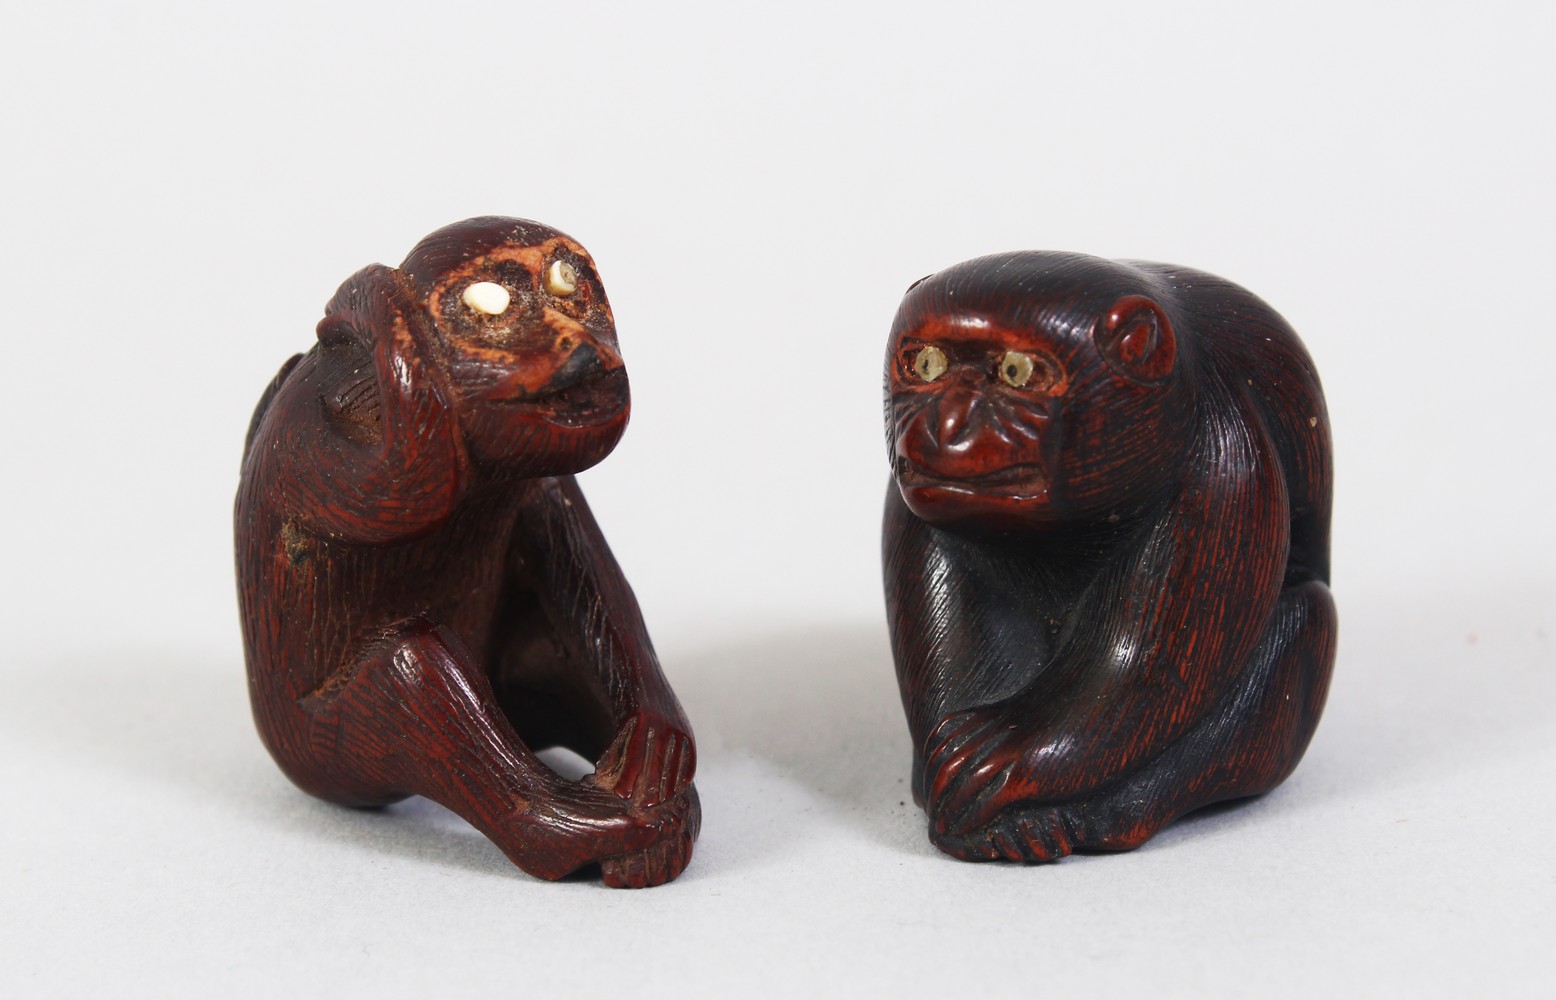 TWO GOOD JAPANESE MEIJI PERIOD CARVED WOODEN NETSUKE OF MONKEYS, both monkeys in seated positions